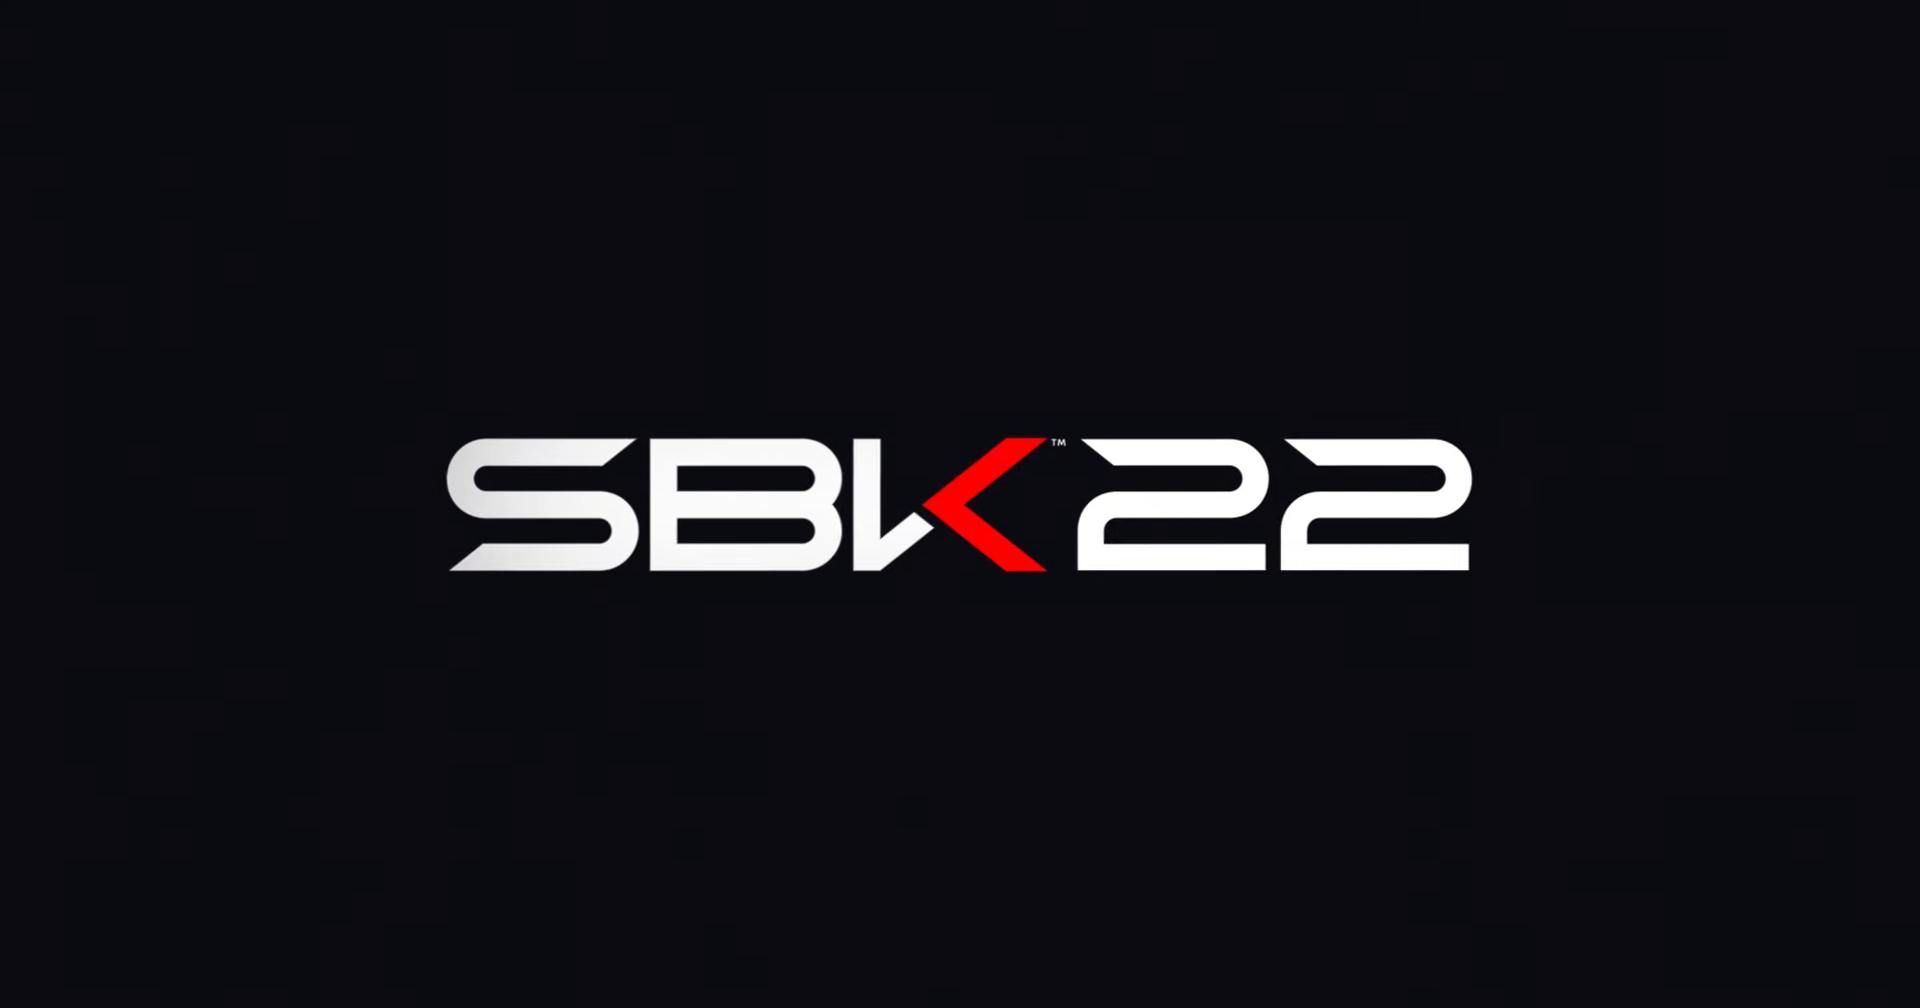 SBK 22 เกมนักซิ่งรายการ WorldSBK Championship เตรียมวางจำหน่ายปีนี้